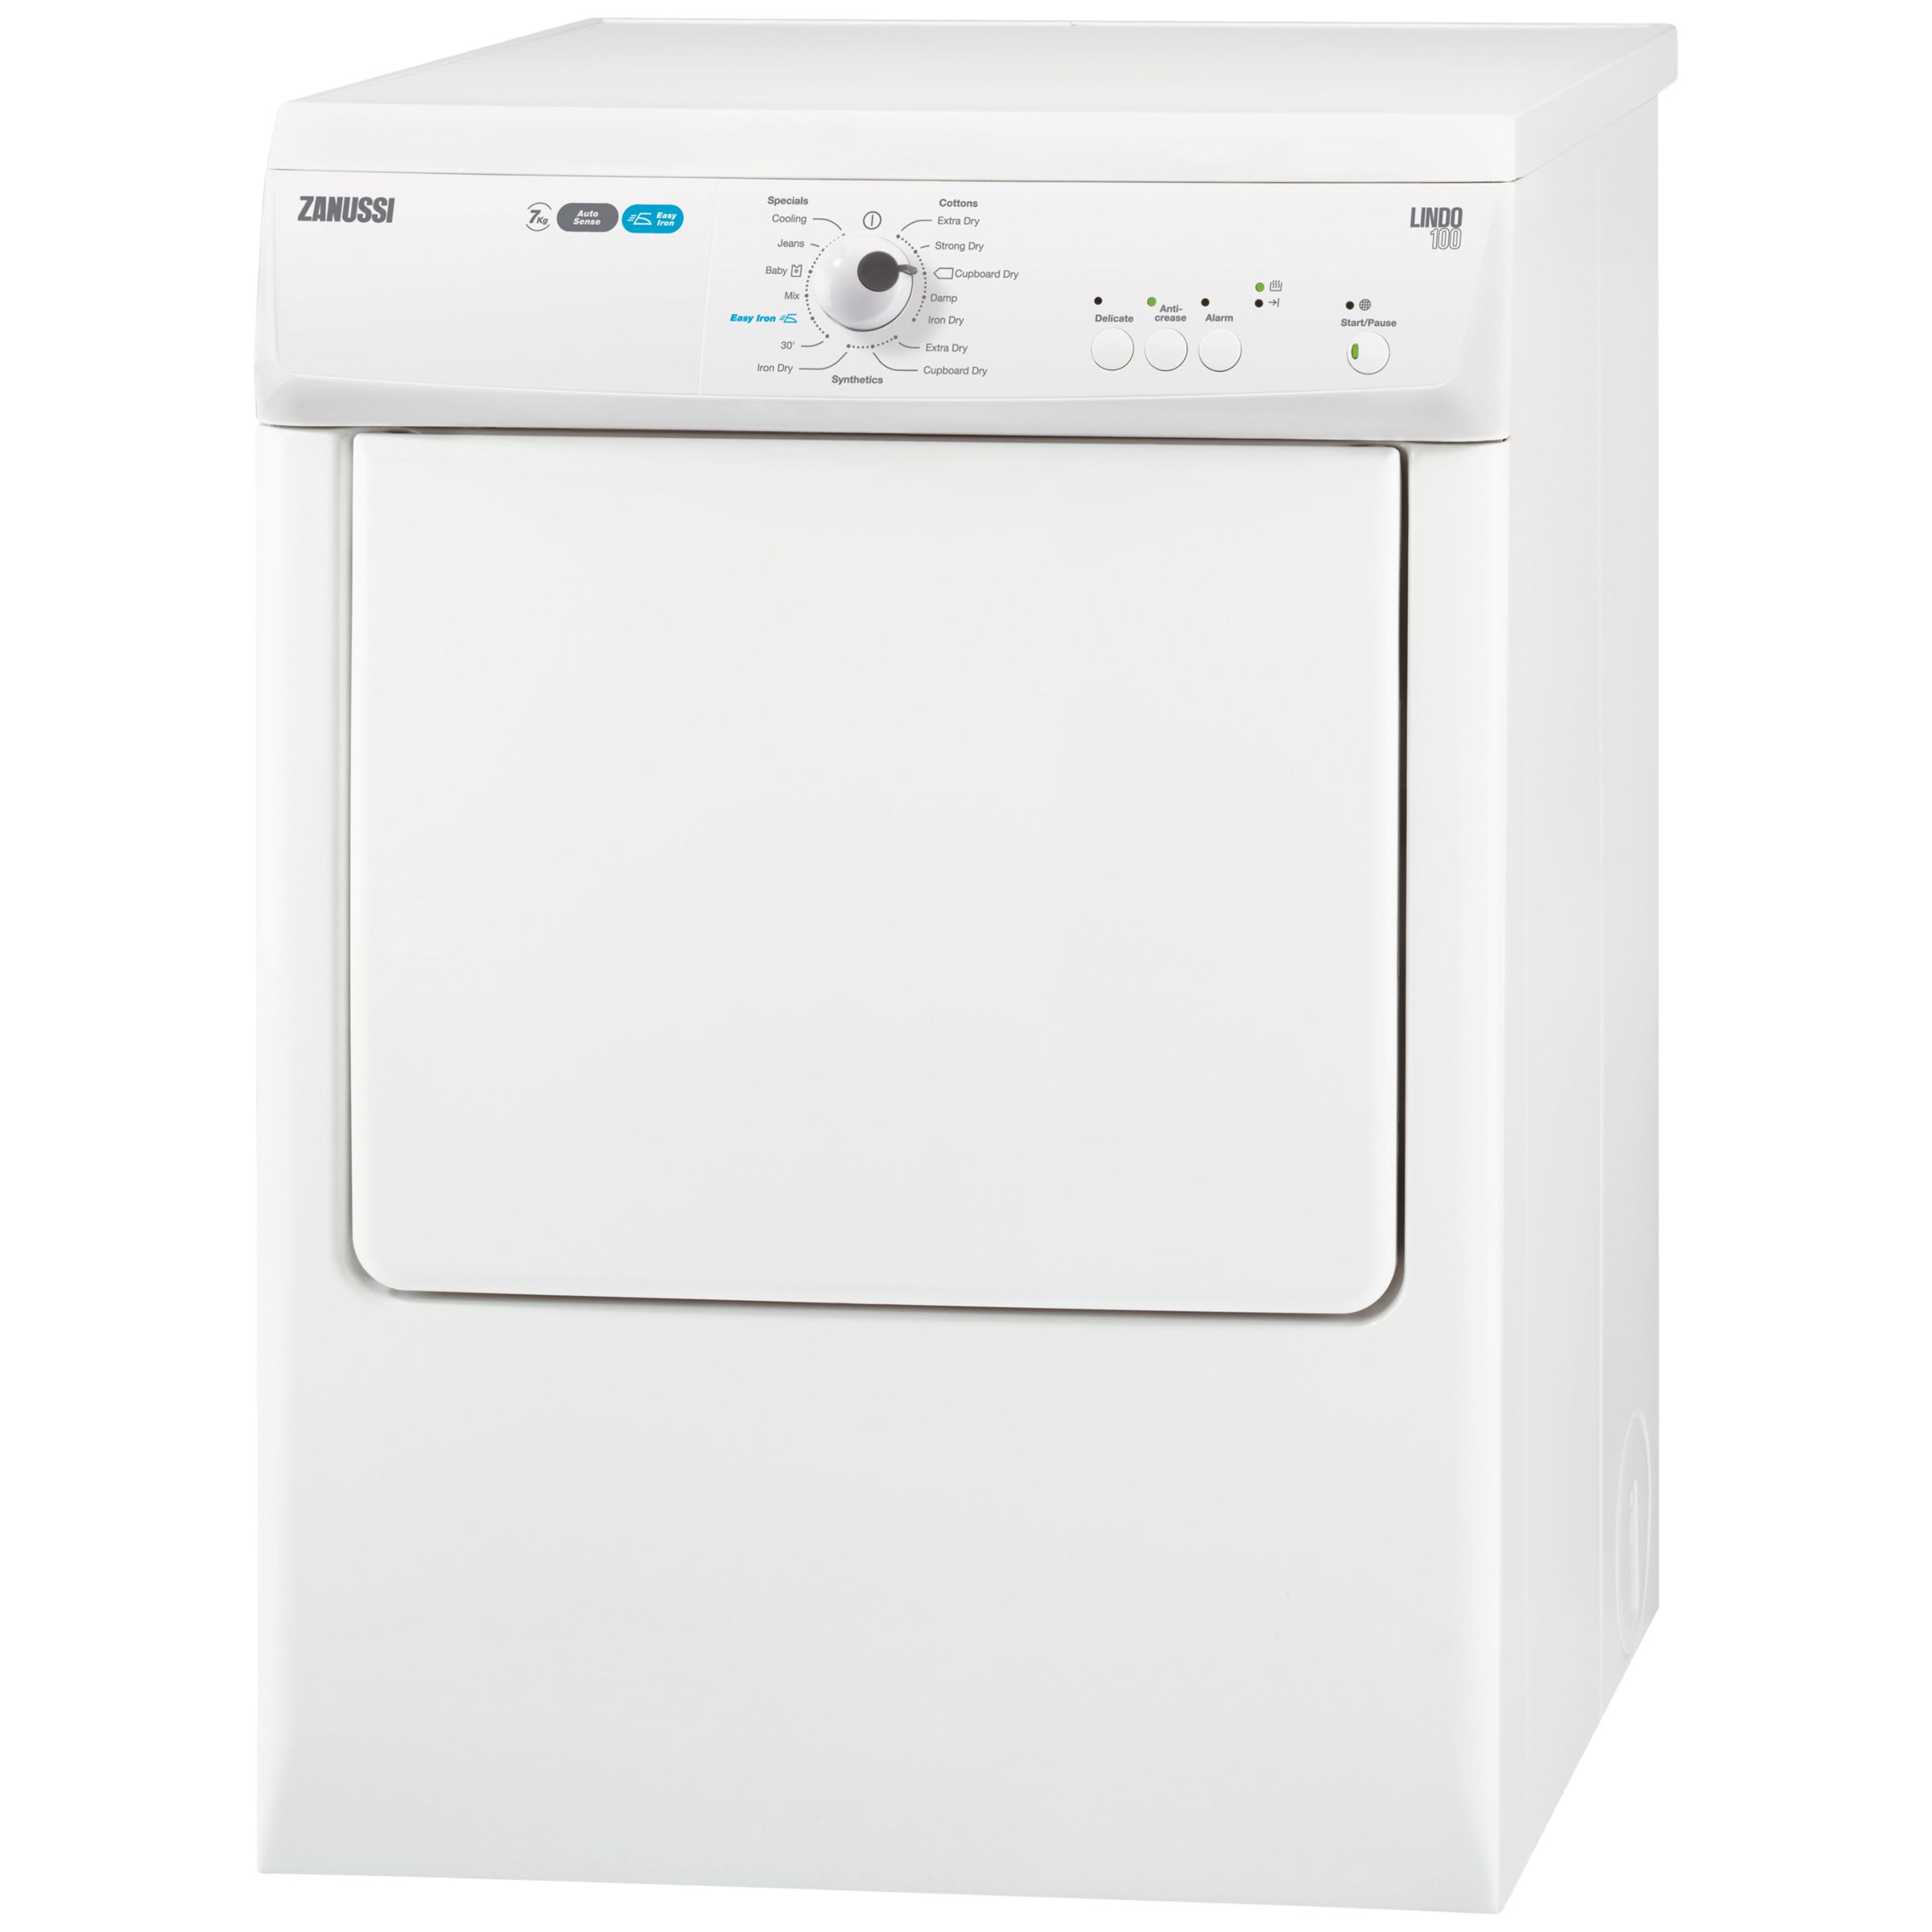 Zanussi ZTE7102PZ Freestanding Vented Tumble Dryer, 7kg Load, C Energy Rating, White